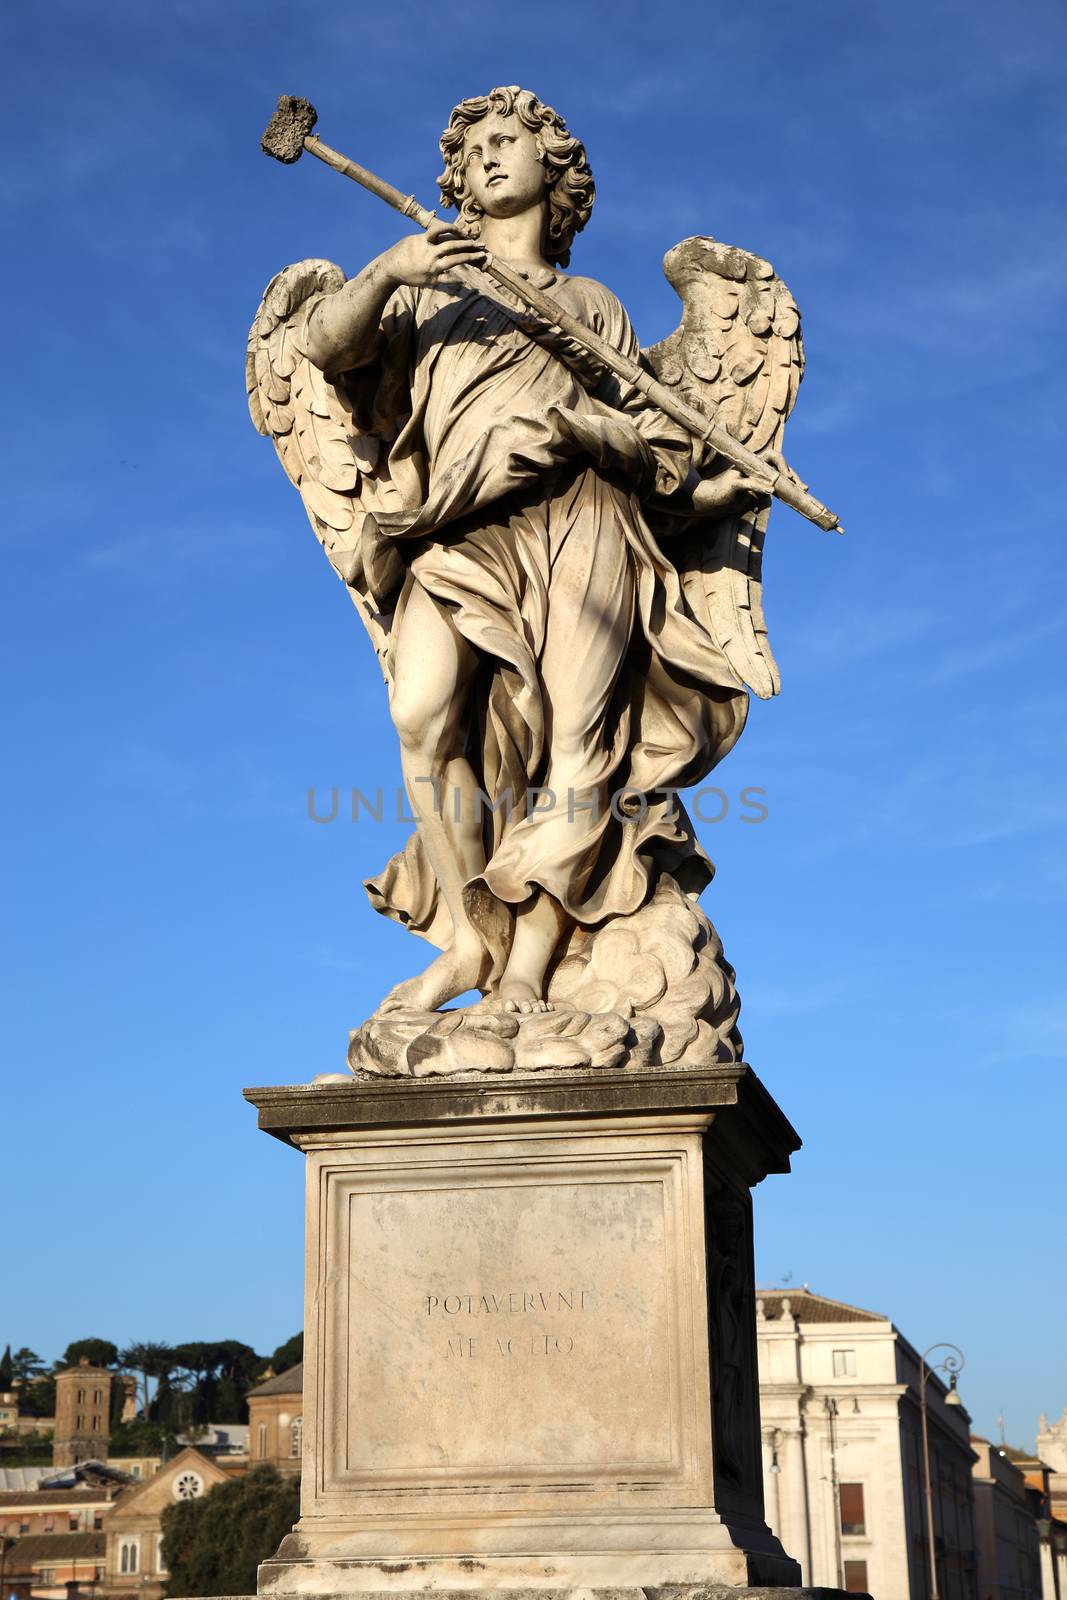 statue Potaverunt me aceto on bridge Castel Sant' Angelo in Rome, Italy 